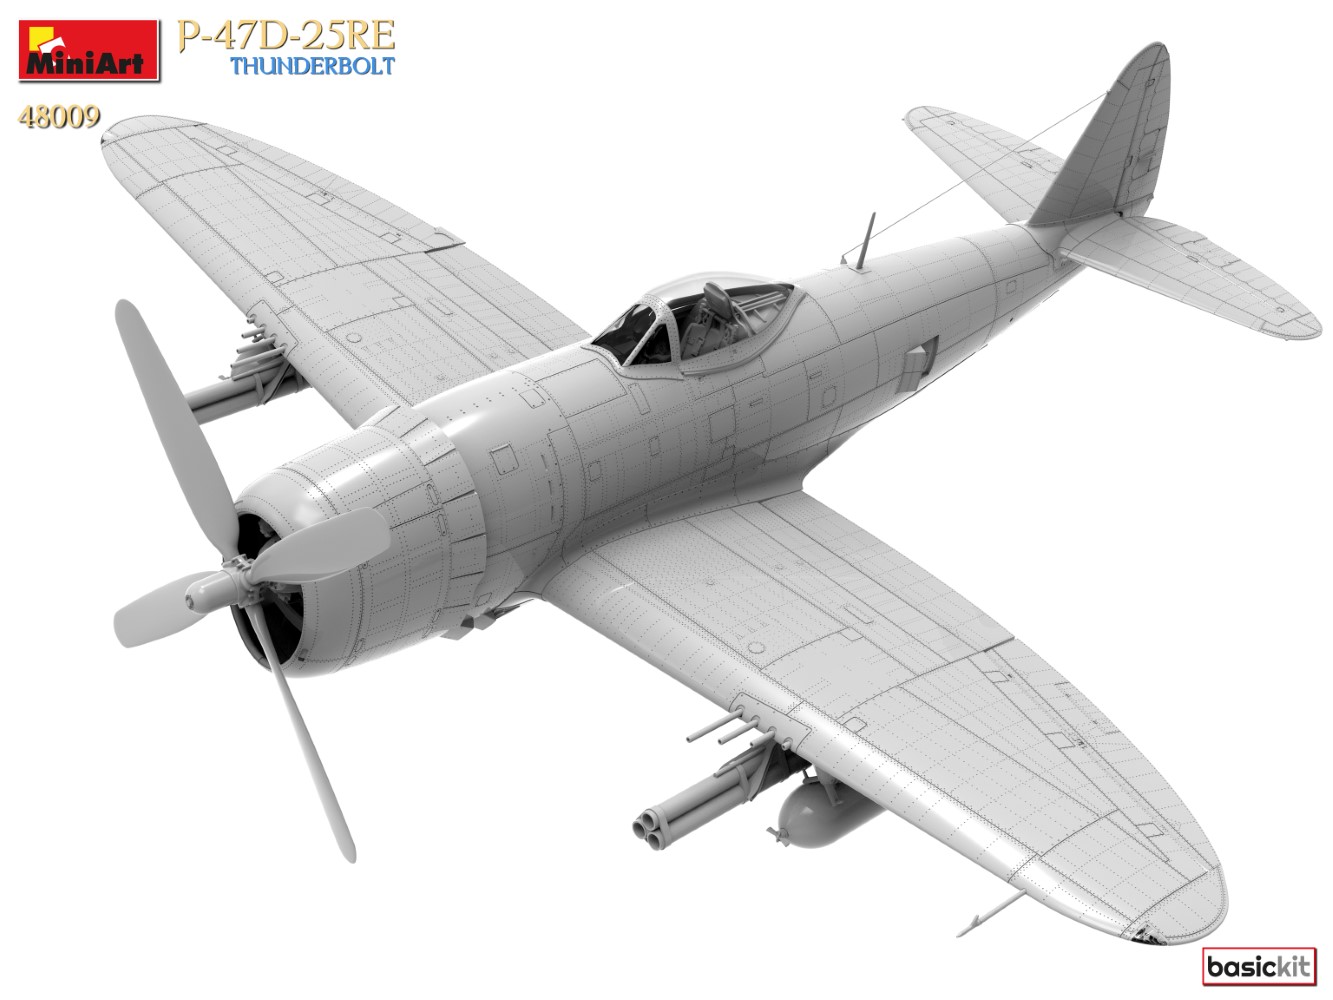 MiniArt 48009 P-47D-25RE THUNDERBOLT 1/48 scale model 